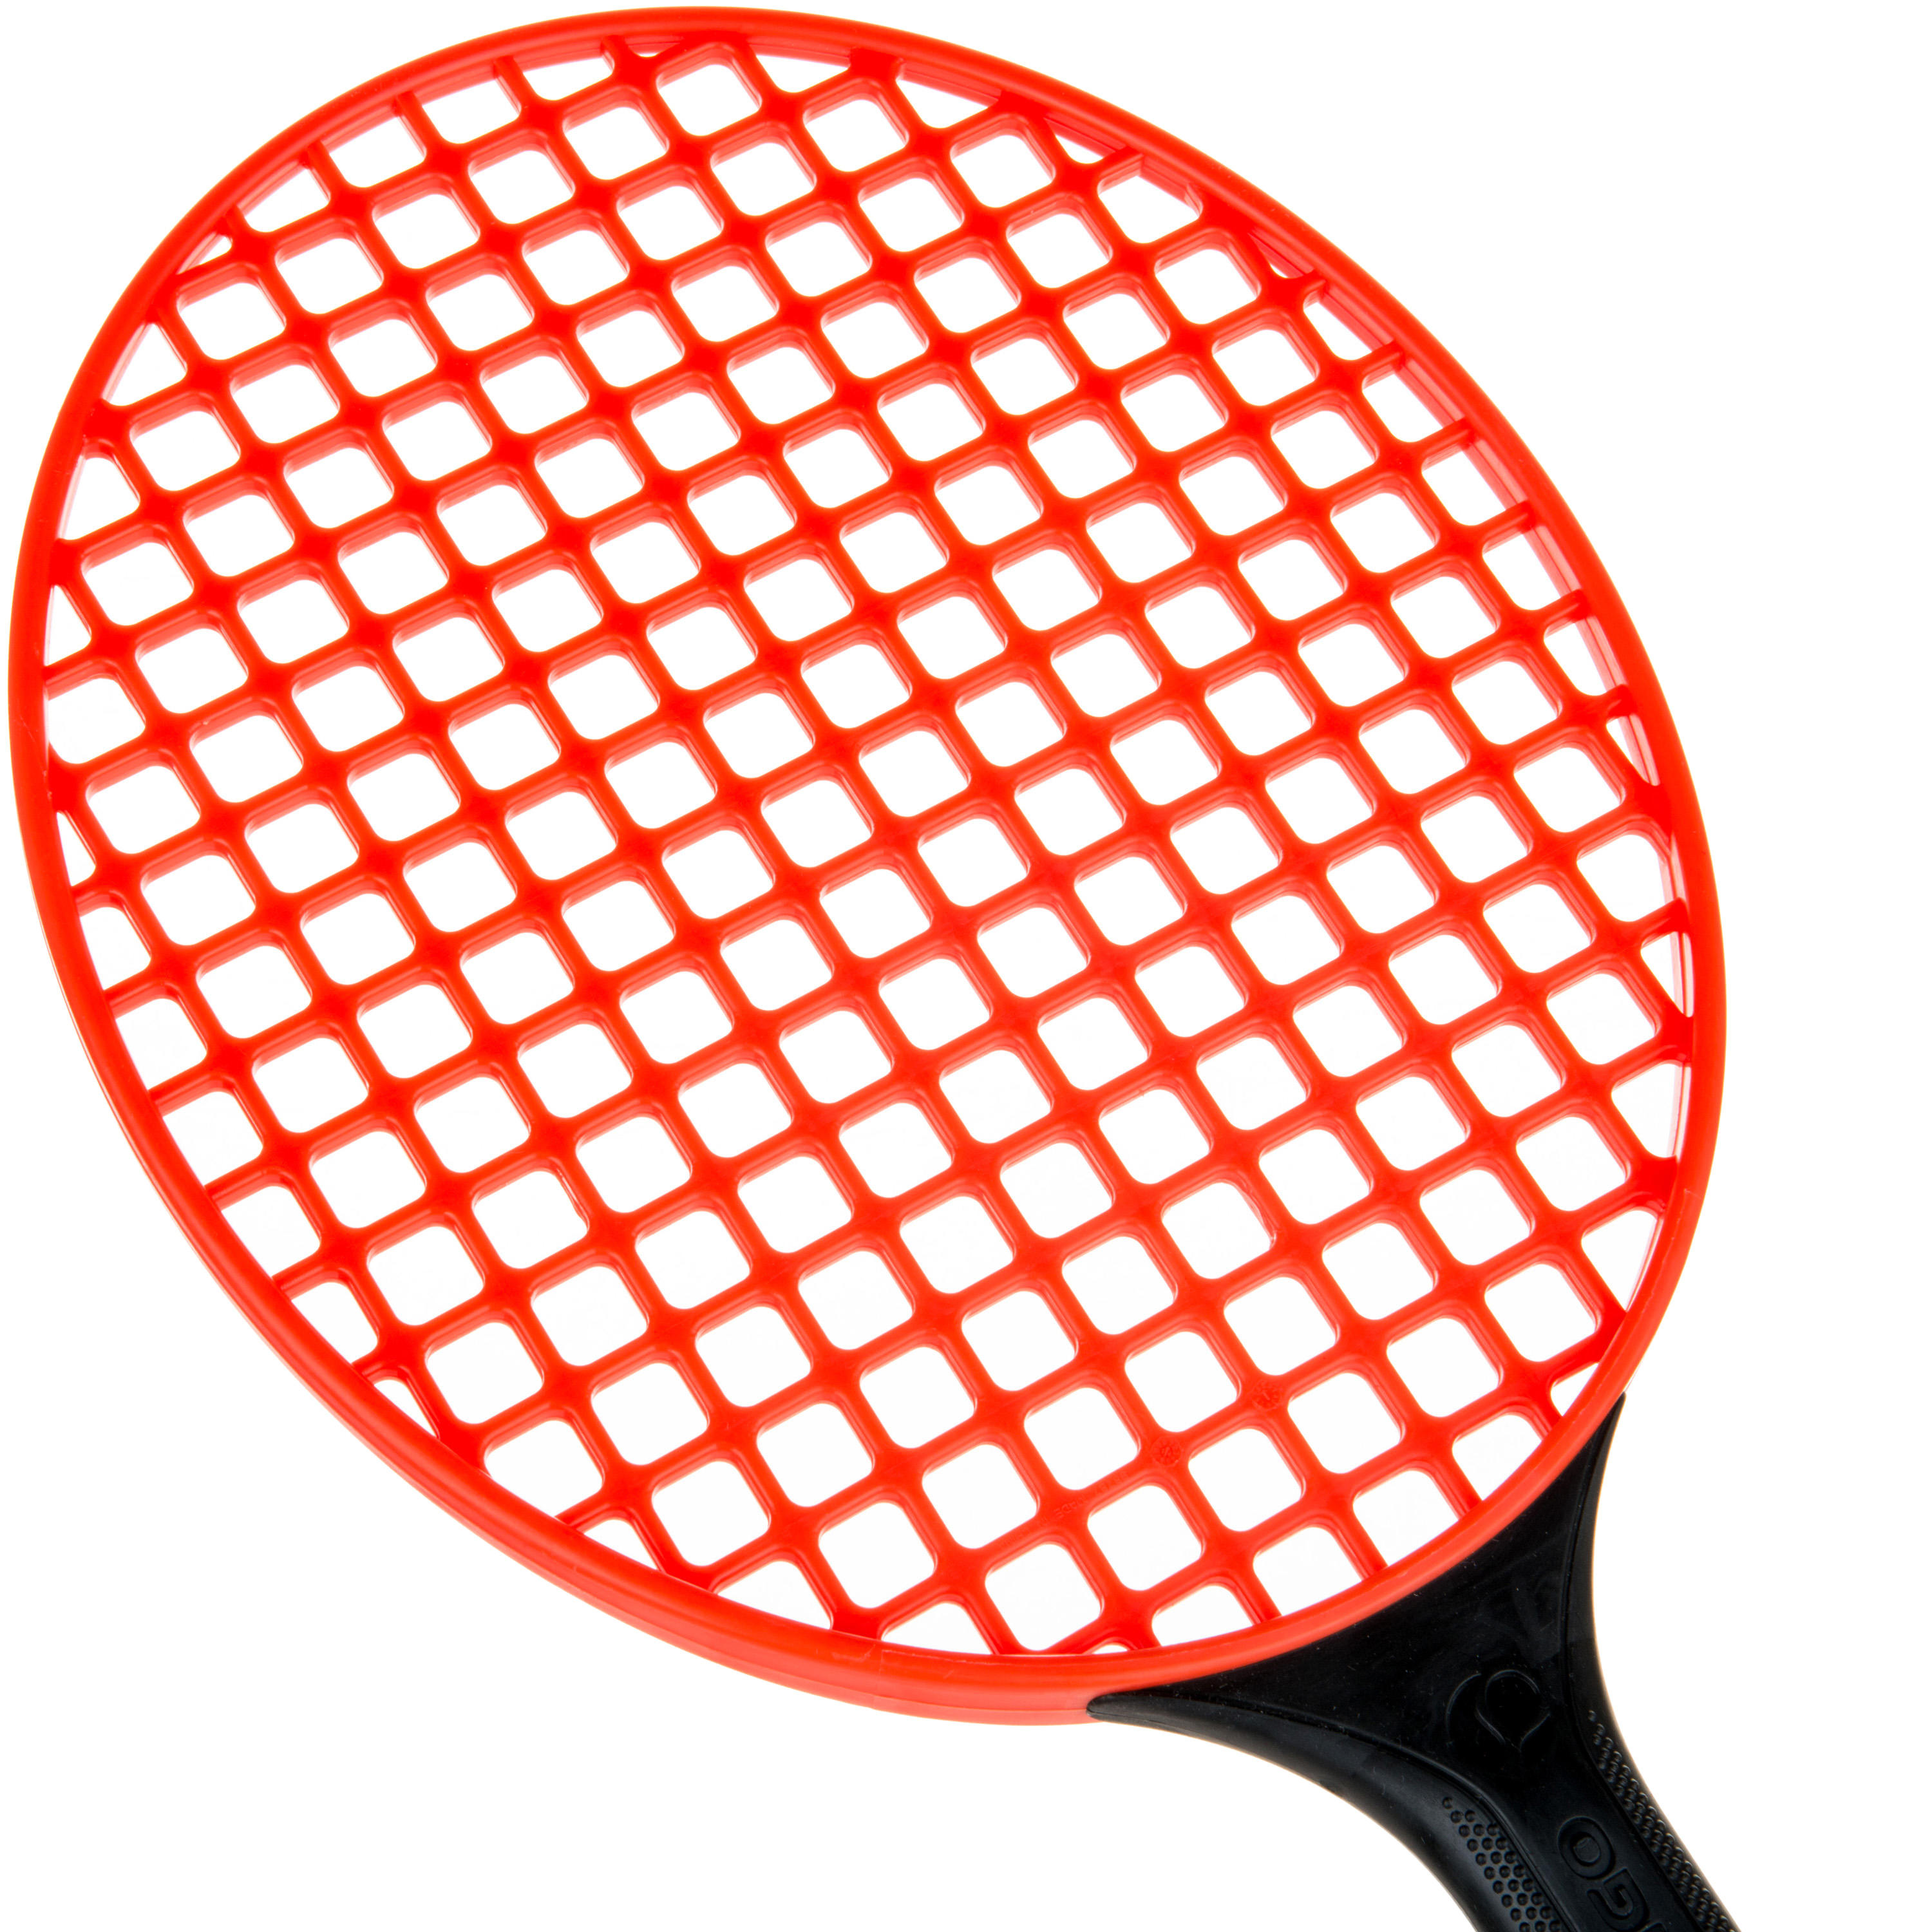 ARTENGO Turnball Racket - Orange